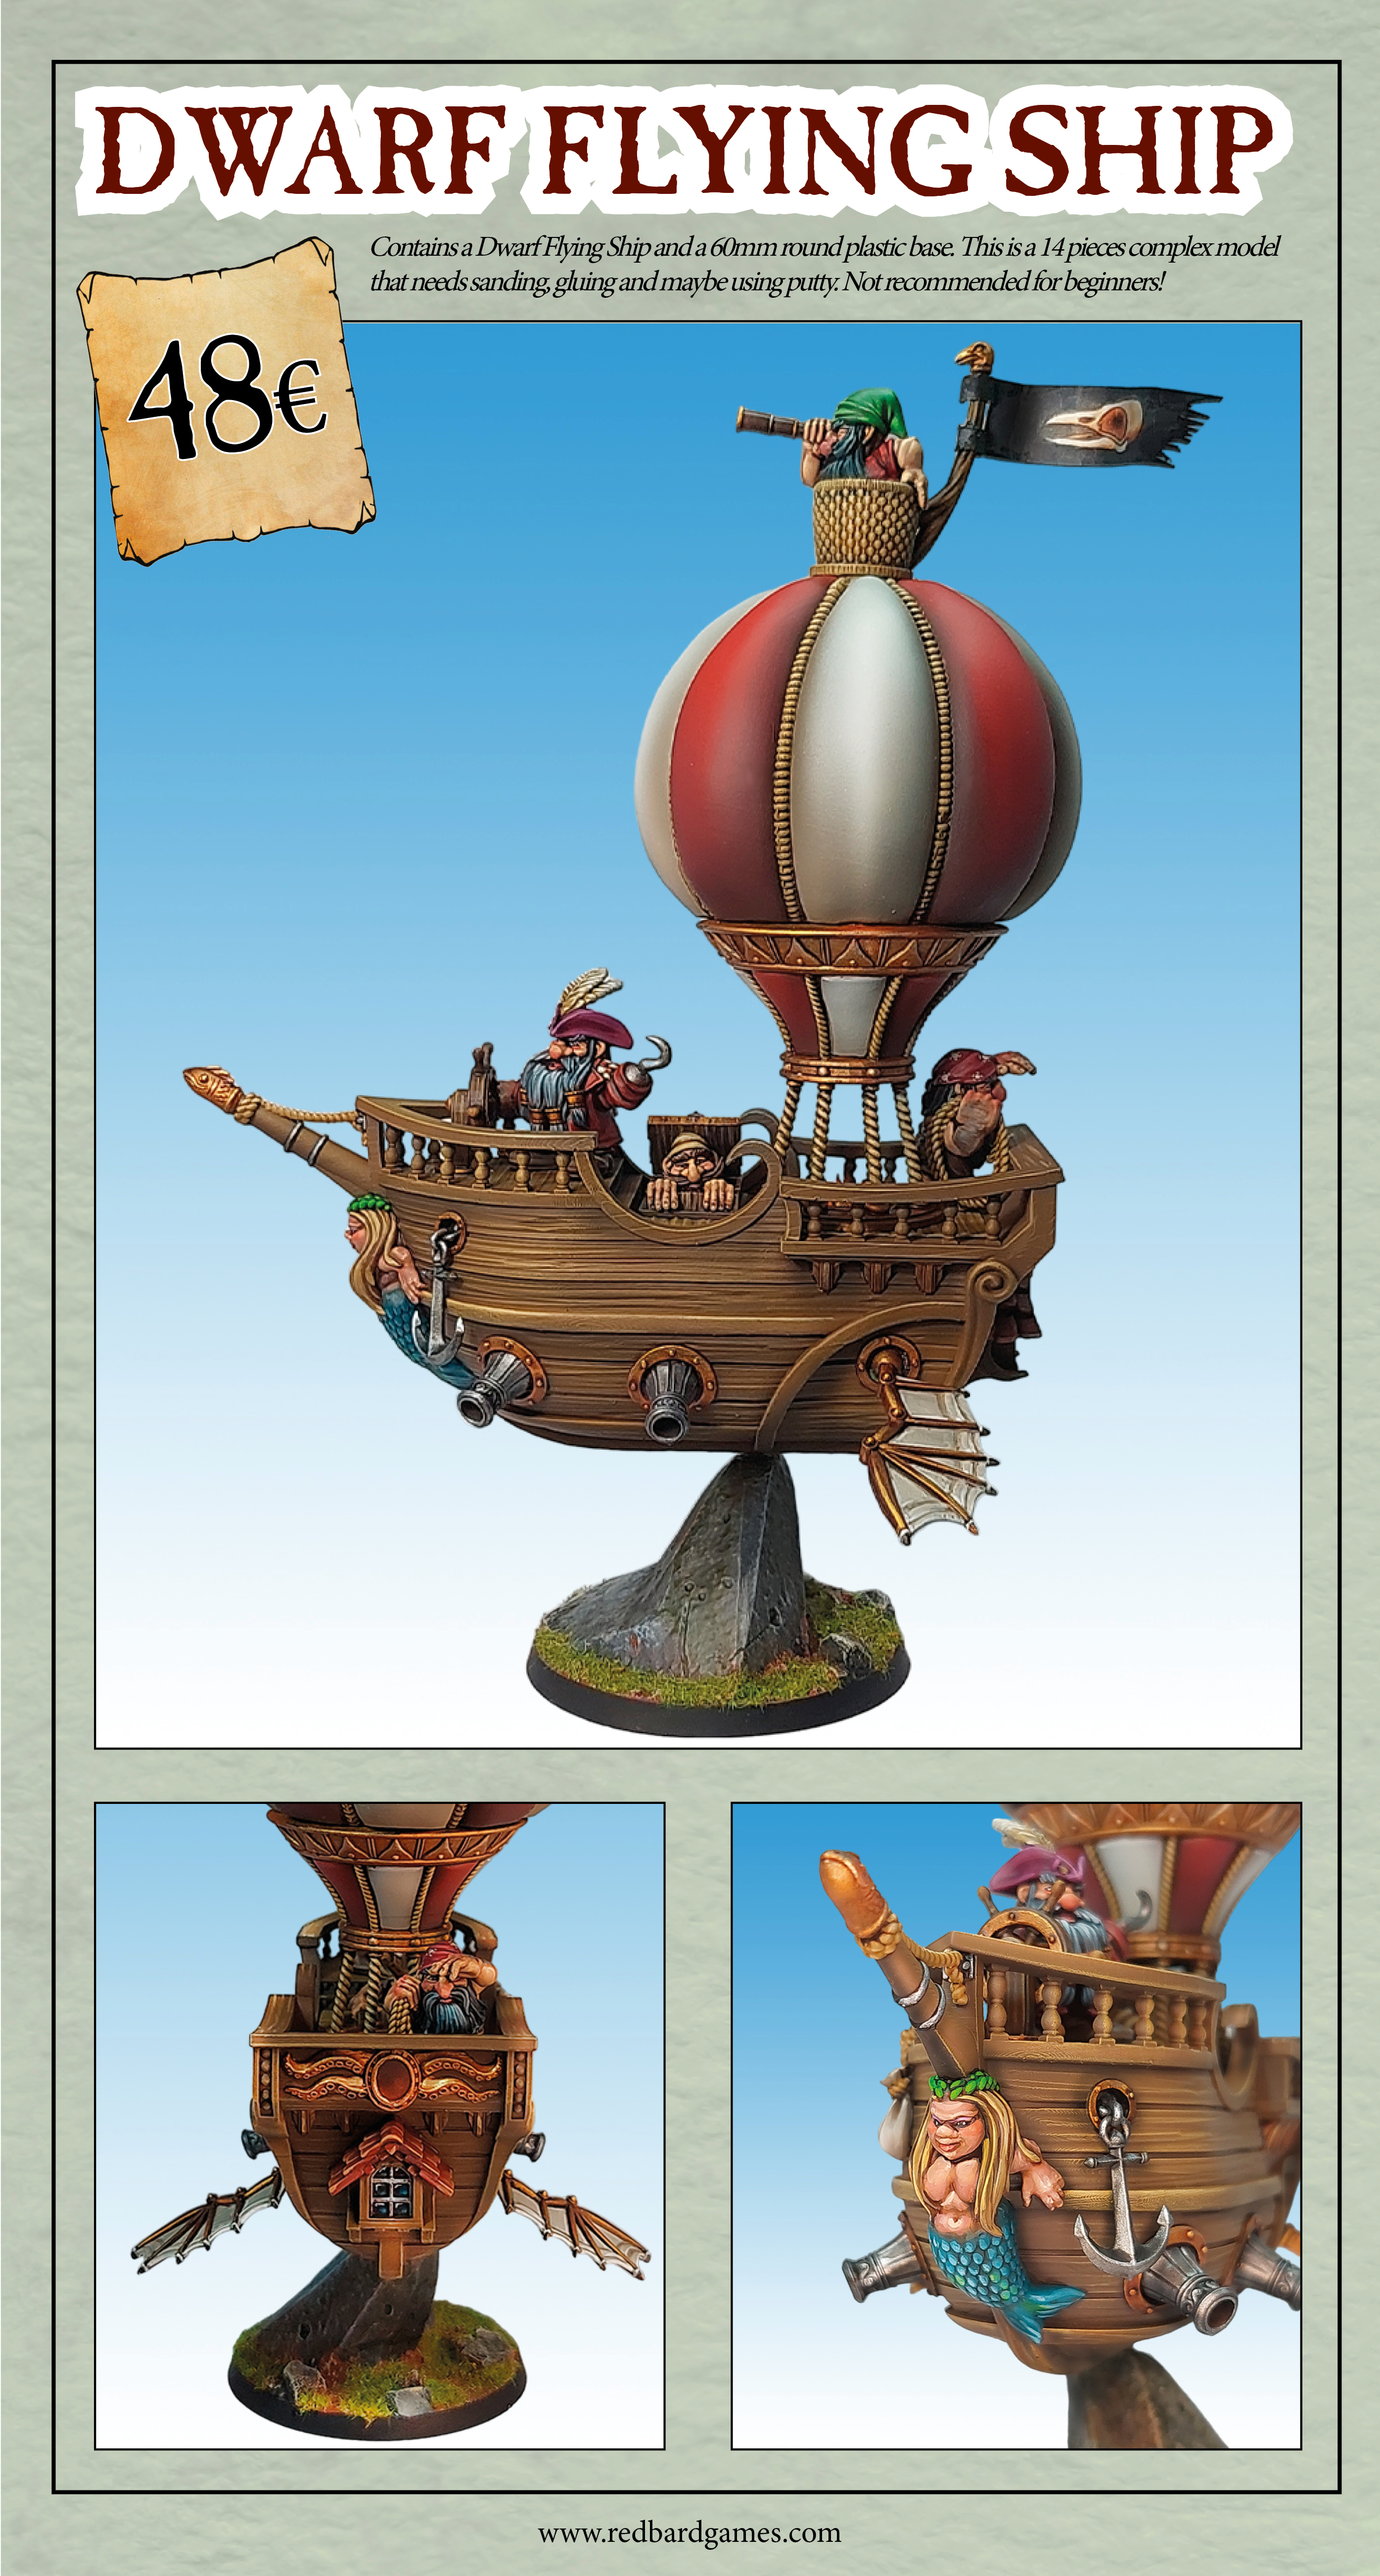 Dwarf Flying Ship - Red Bard Games